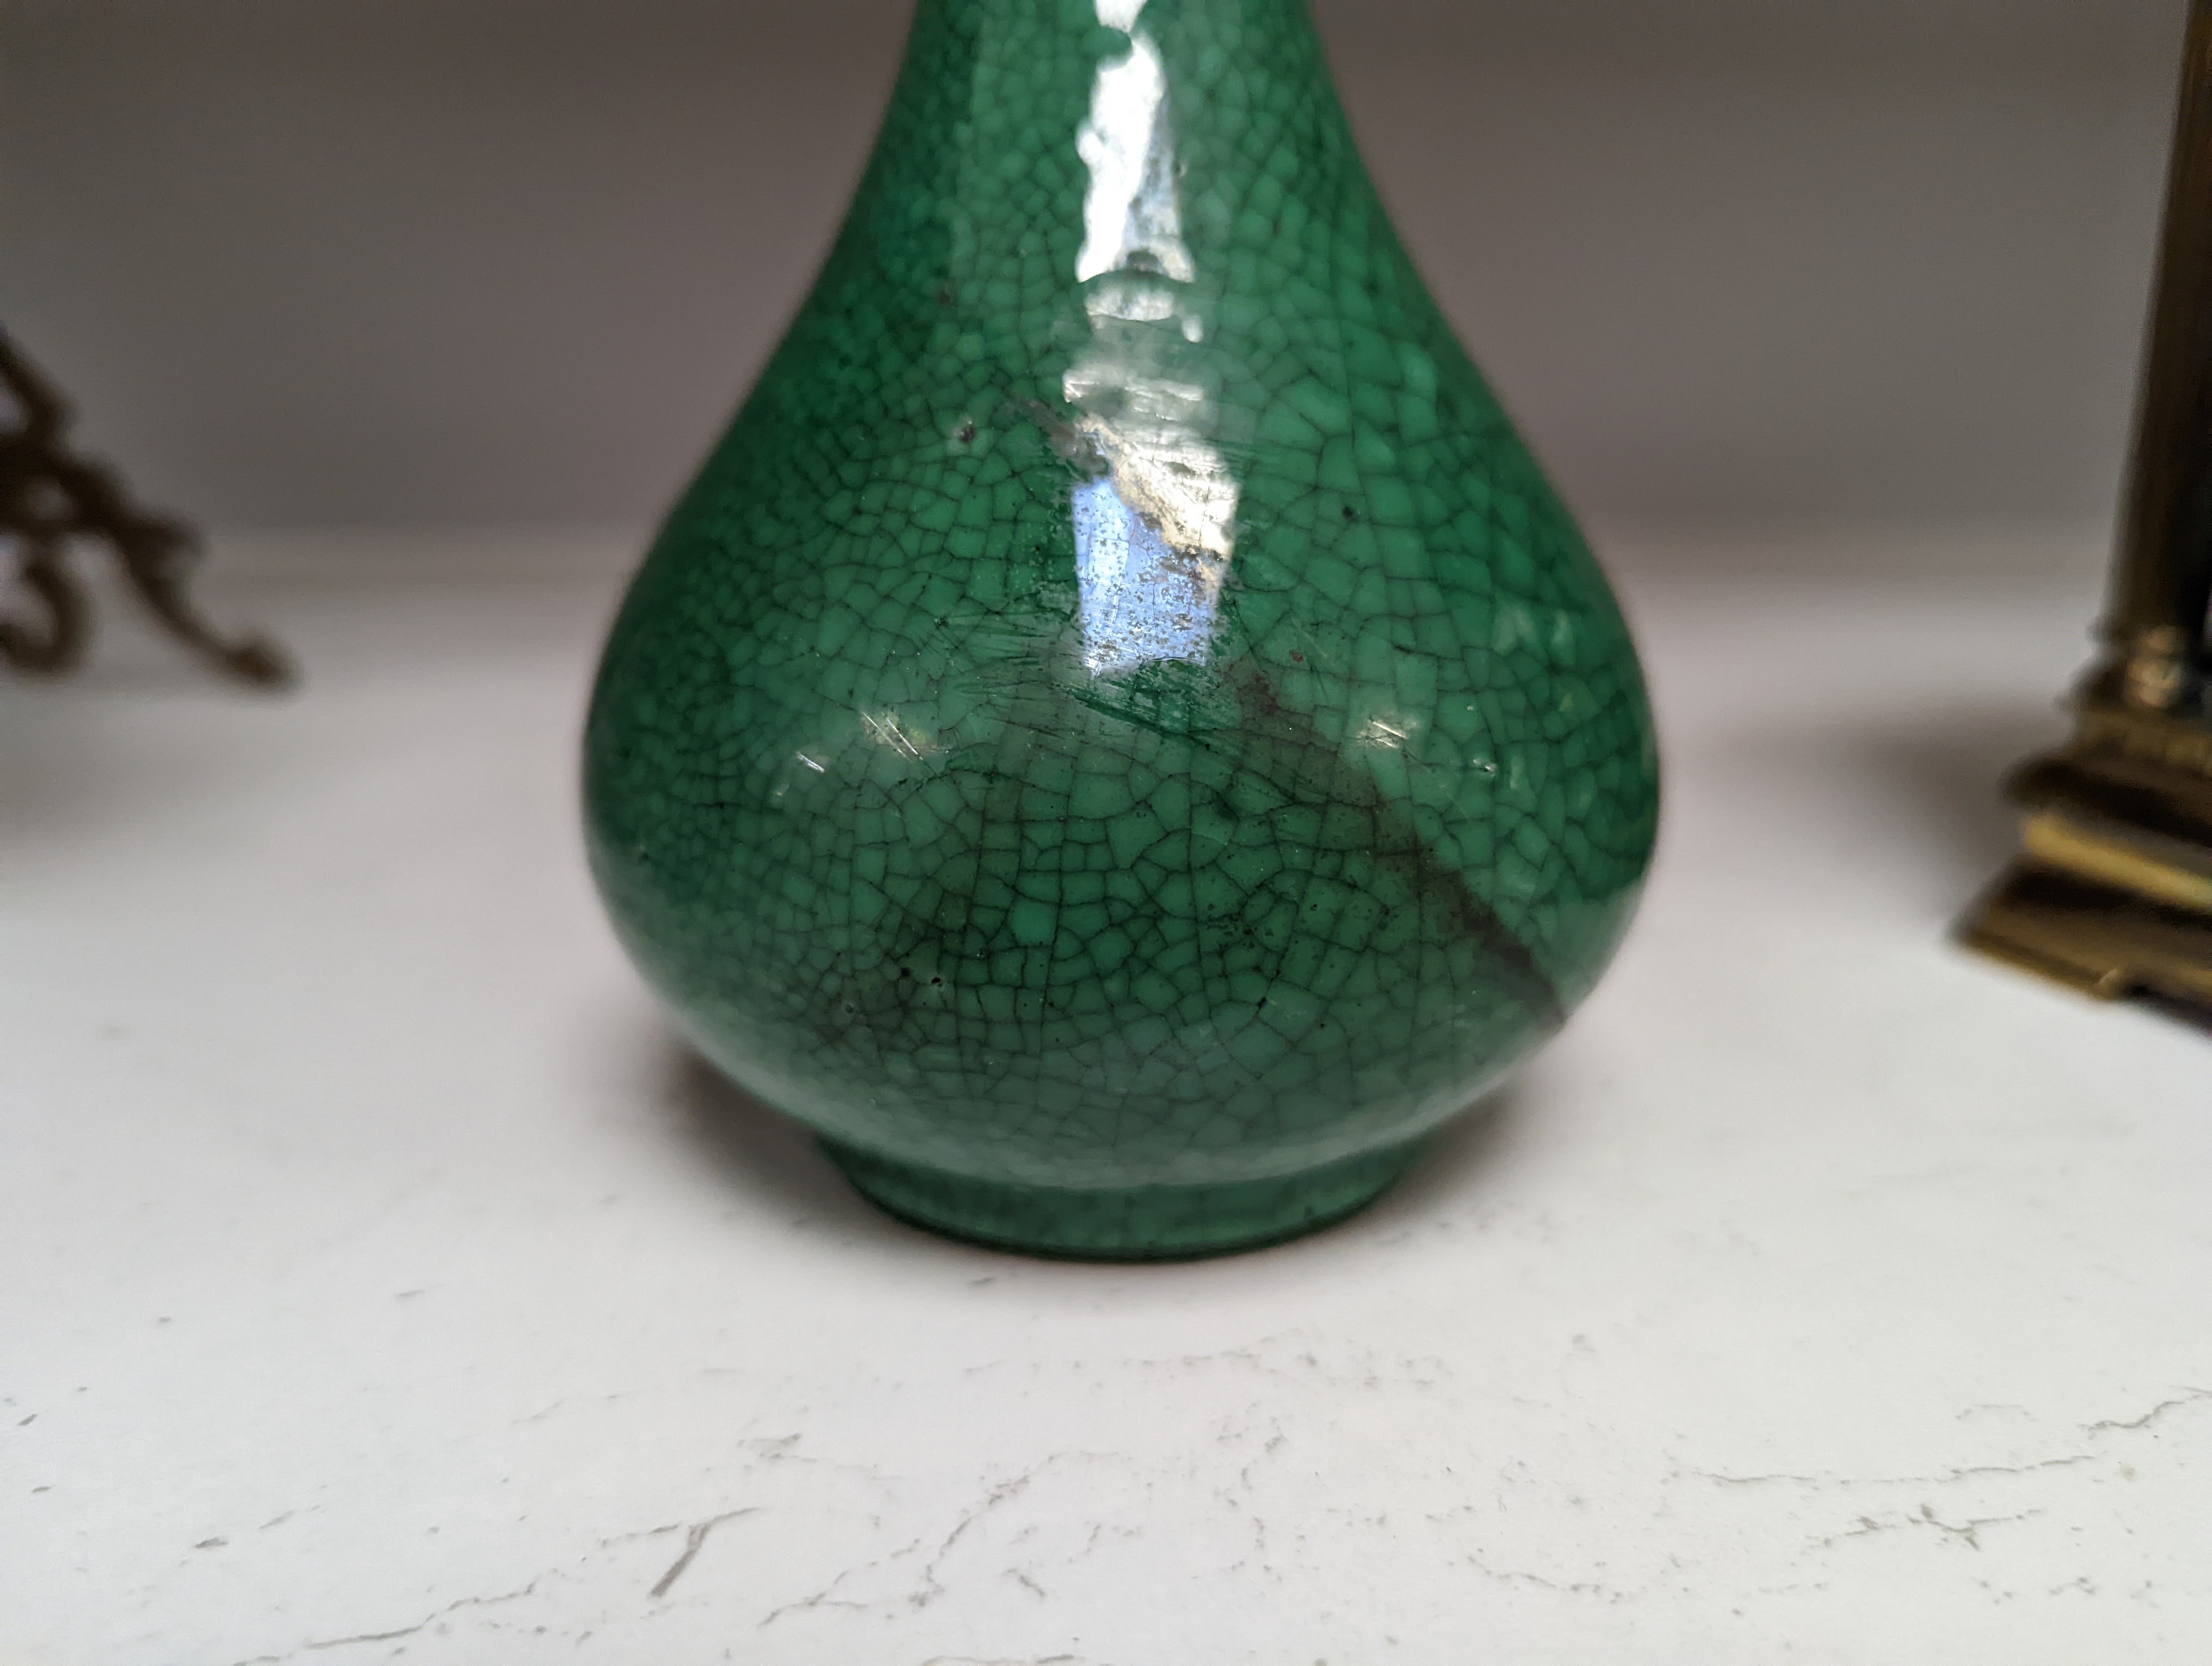 A Chinese green crackle glaze vase 15cm